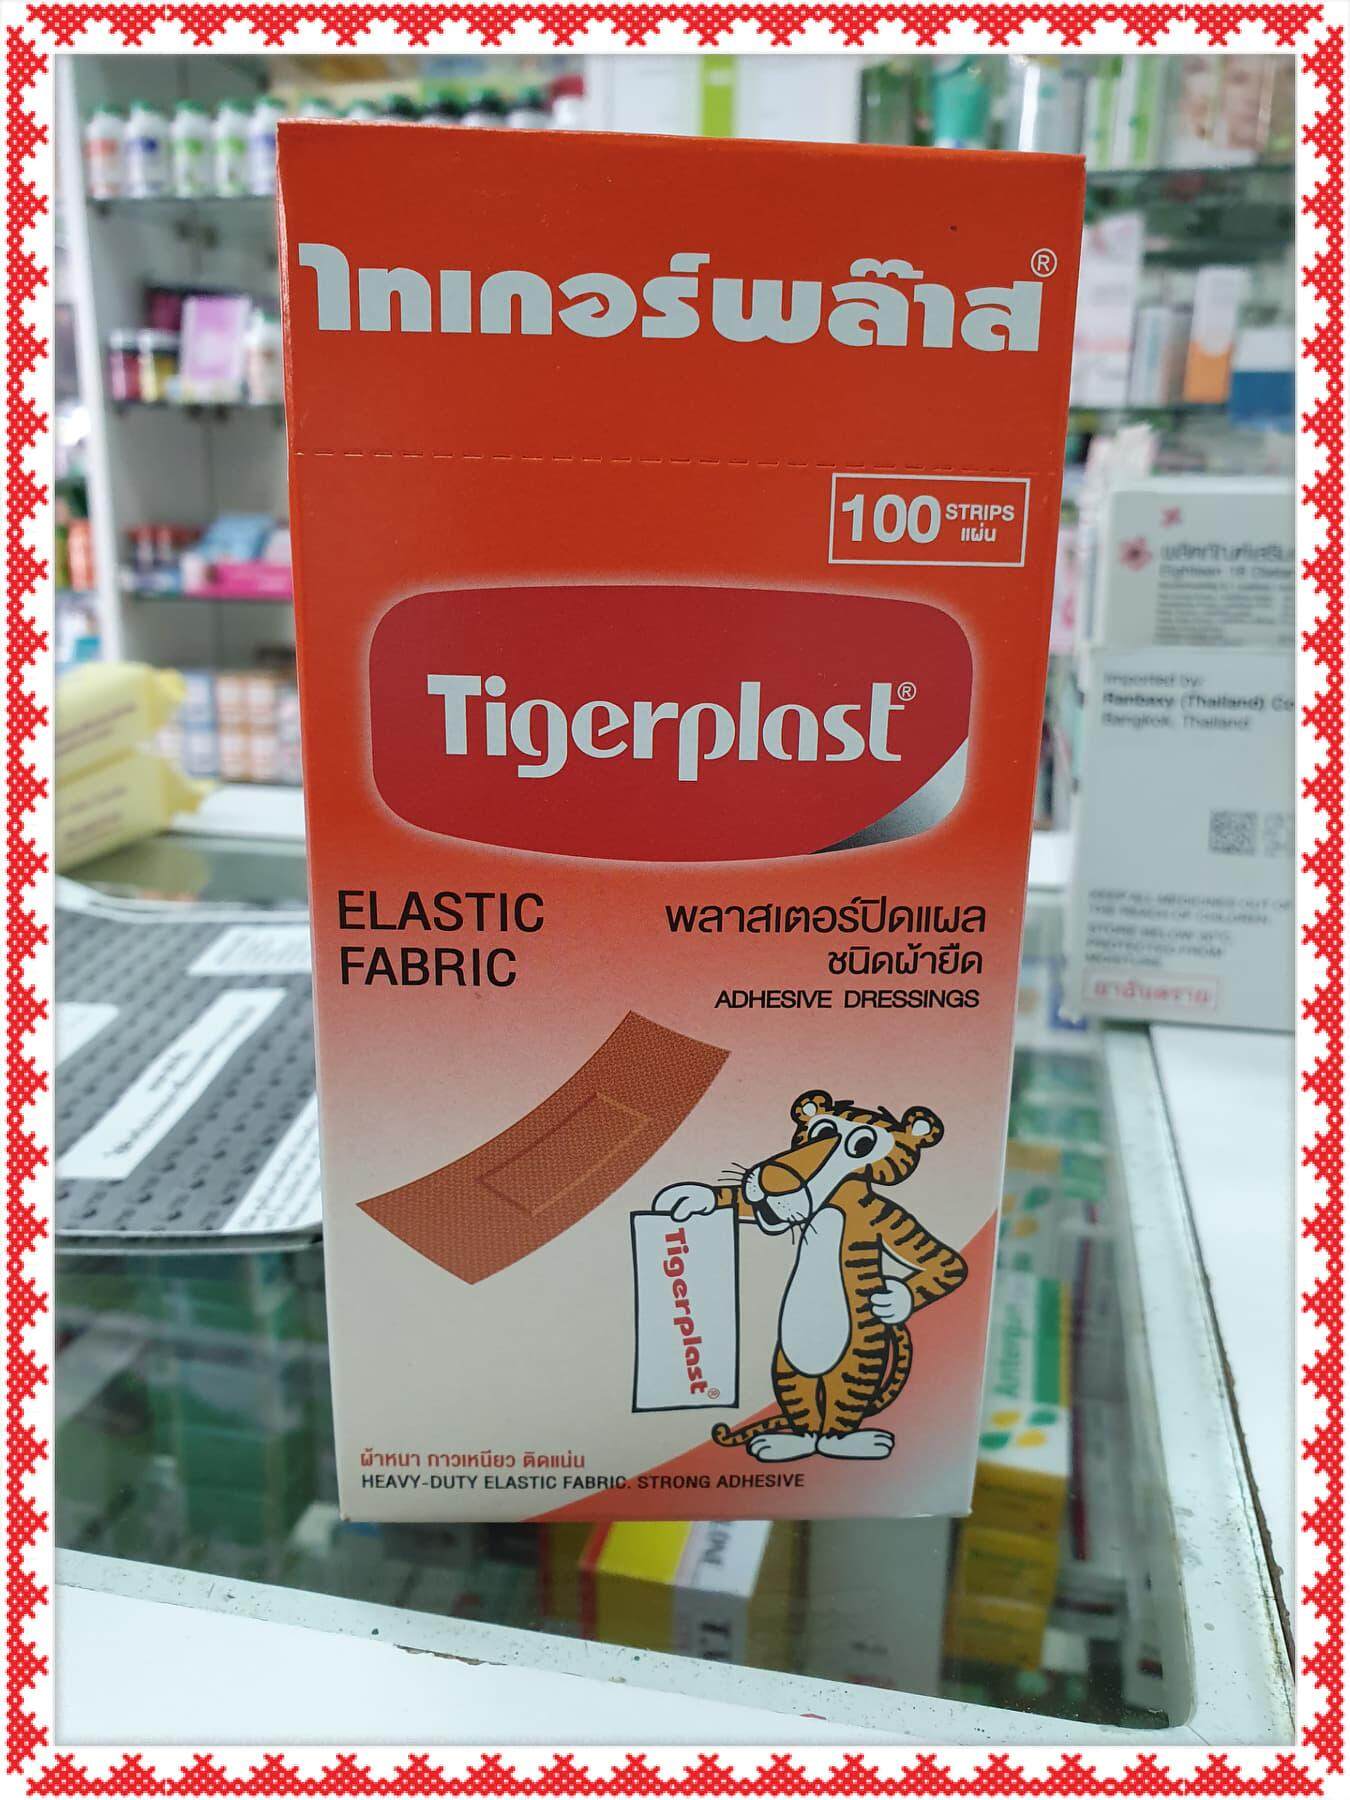 Tigerplast ไทเกอร์พลาส พลาสเตอร์ยา แบบผ้าสีส้ม 100 ชิ้น 1กล่อง